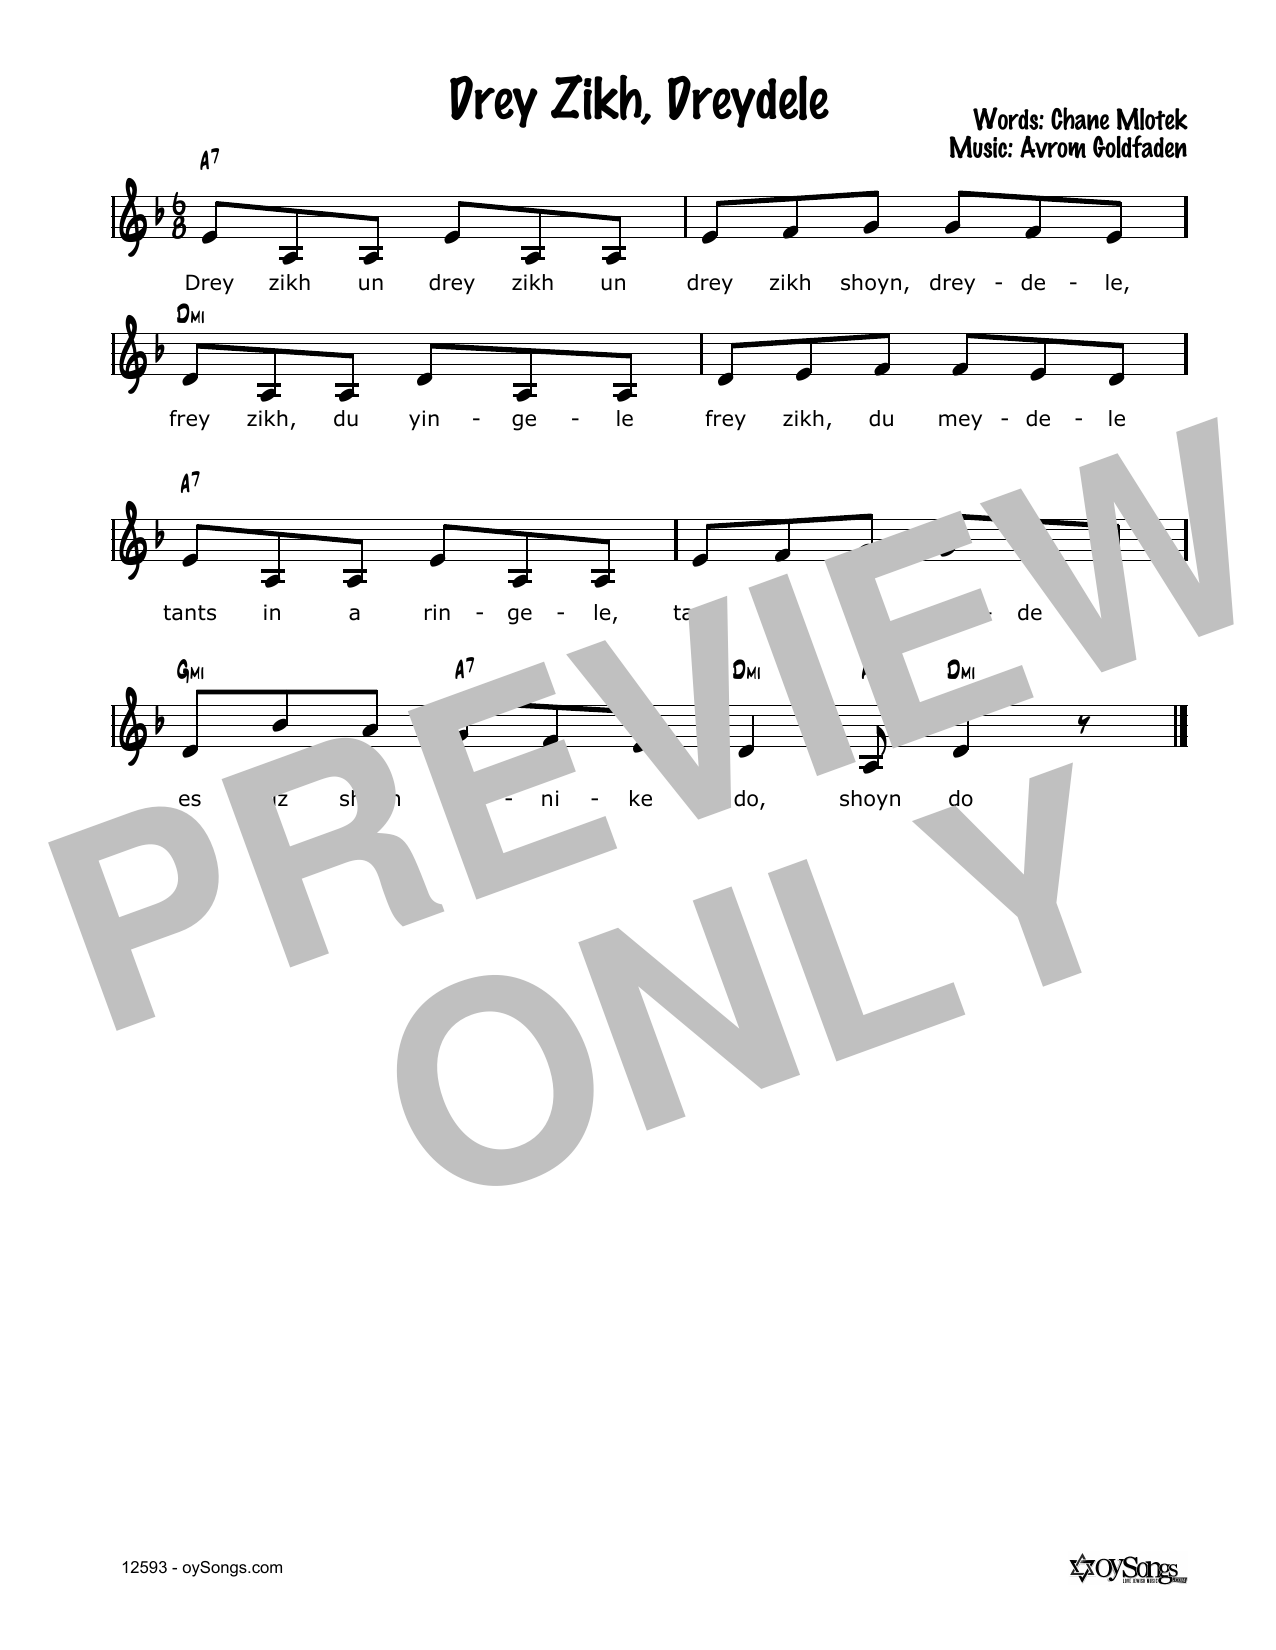 Avrom Goldfaden Drei Zich, Dreidele Sheet Music Notes & Chords for Melody Line, Lyrics & Chords - Download or Print PDF